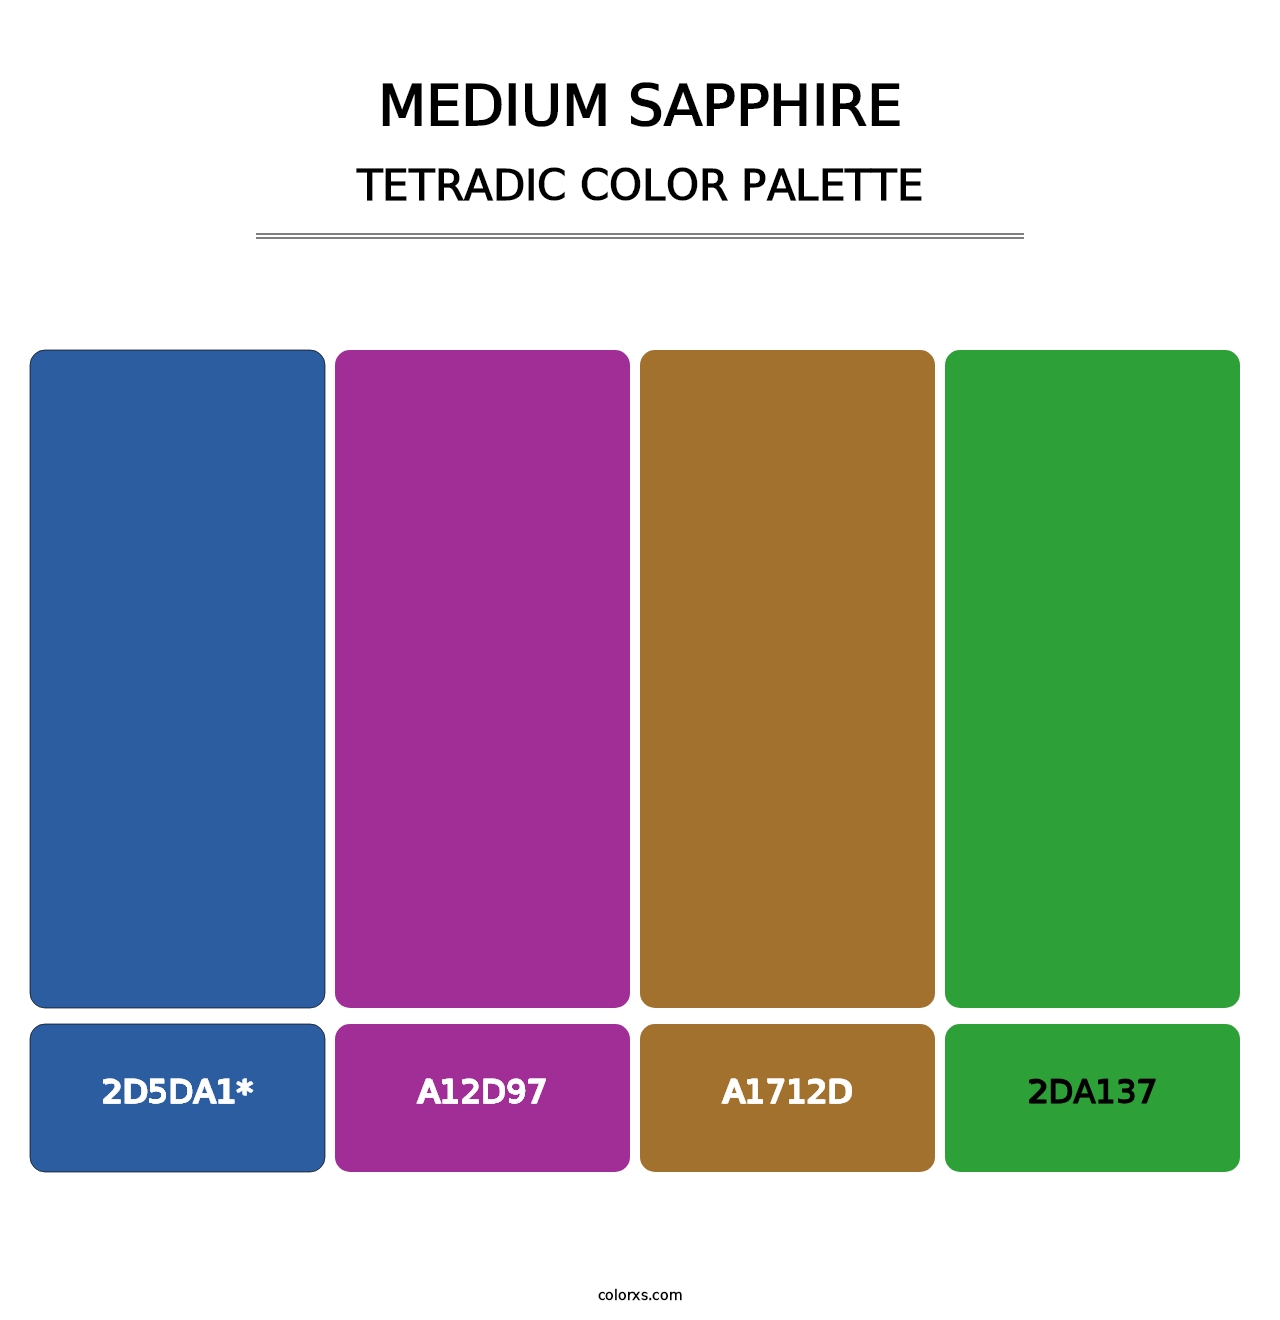 Medium Sapphire - Tetradic Color Palette